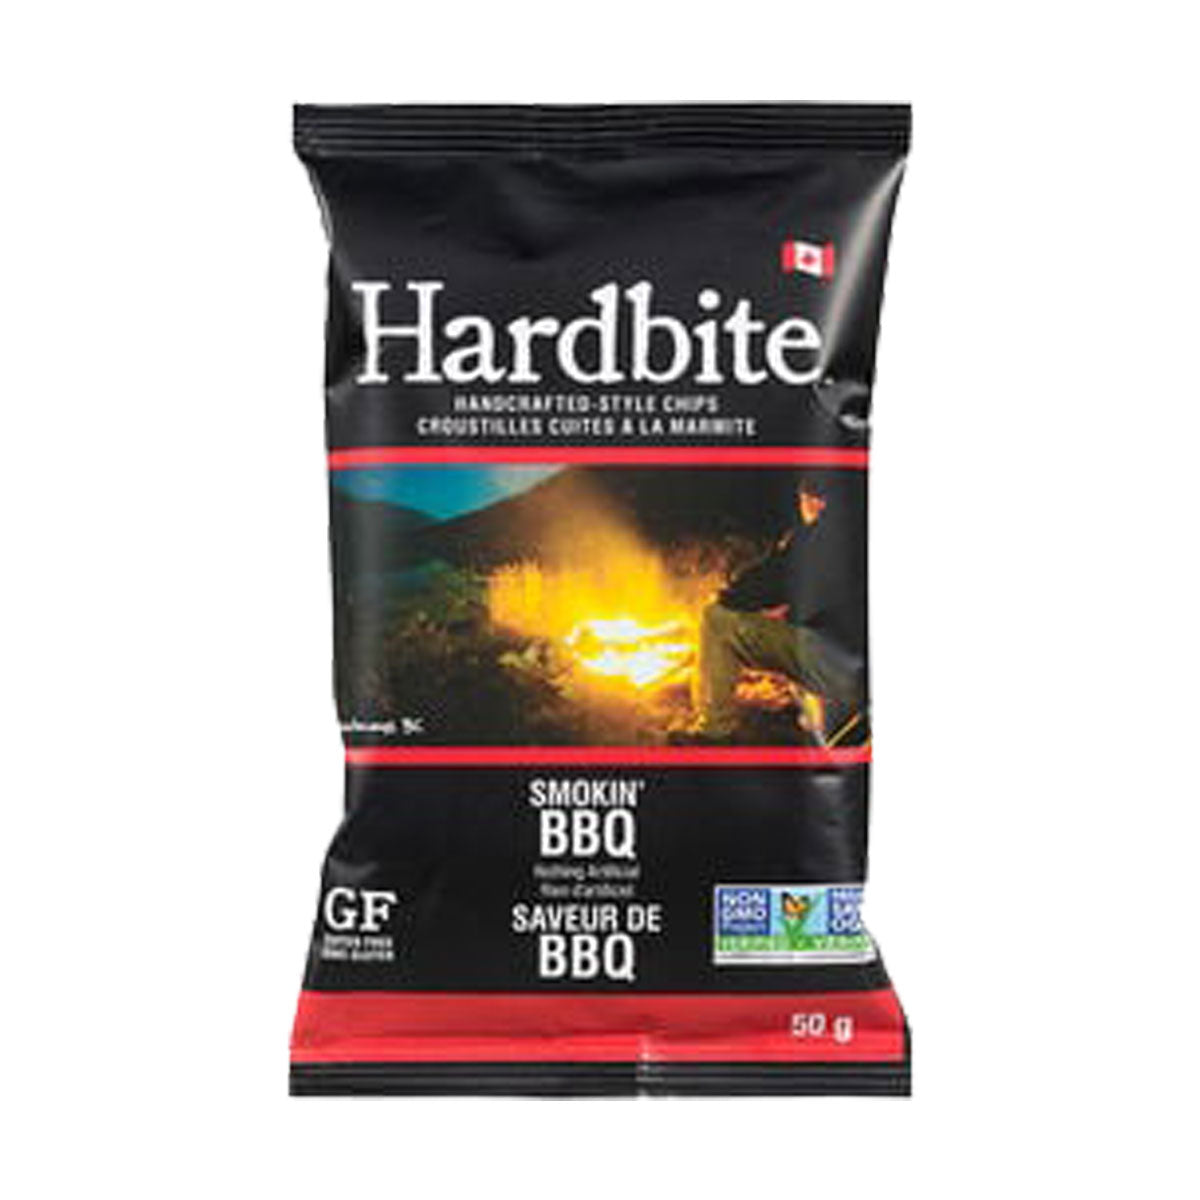 TAG Liquor Stores BC - Hardbite Smokin' BBQ Chips 50 Gram Bag